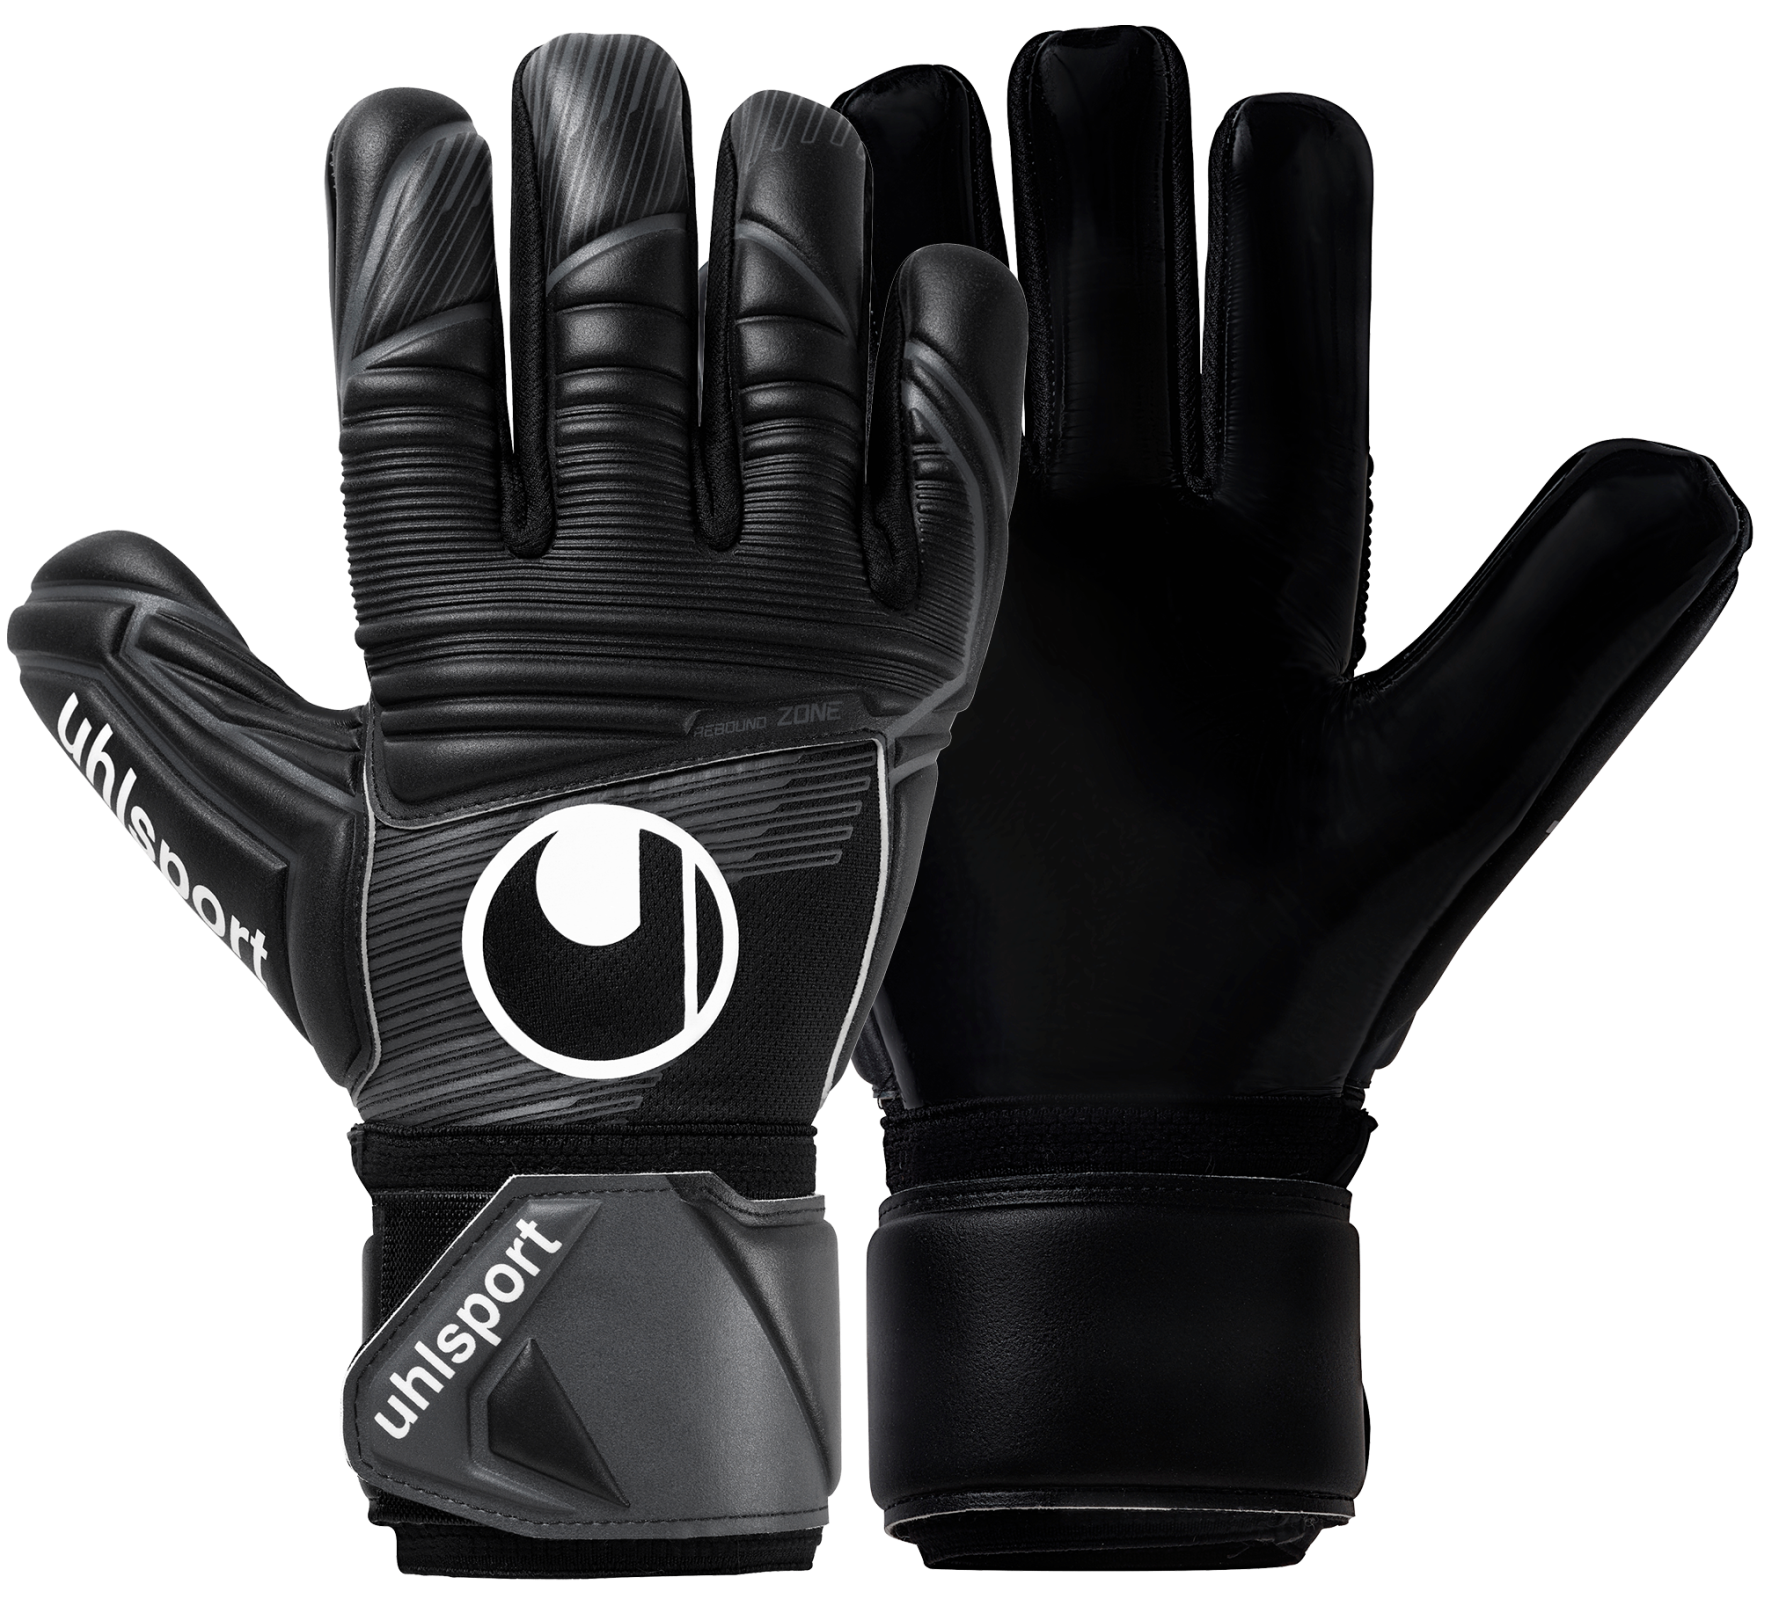 Goalkeeper's Uhlsport Comfort Absolutgrip HN Goalkeeper Gloves